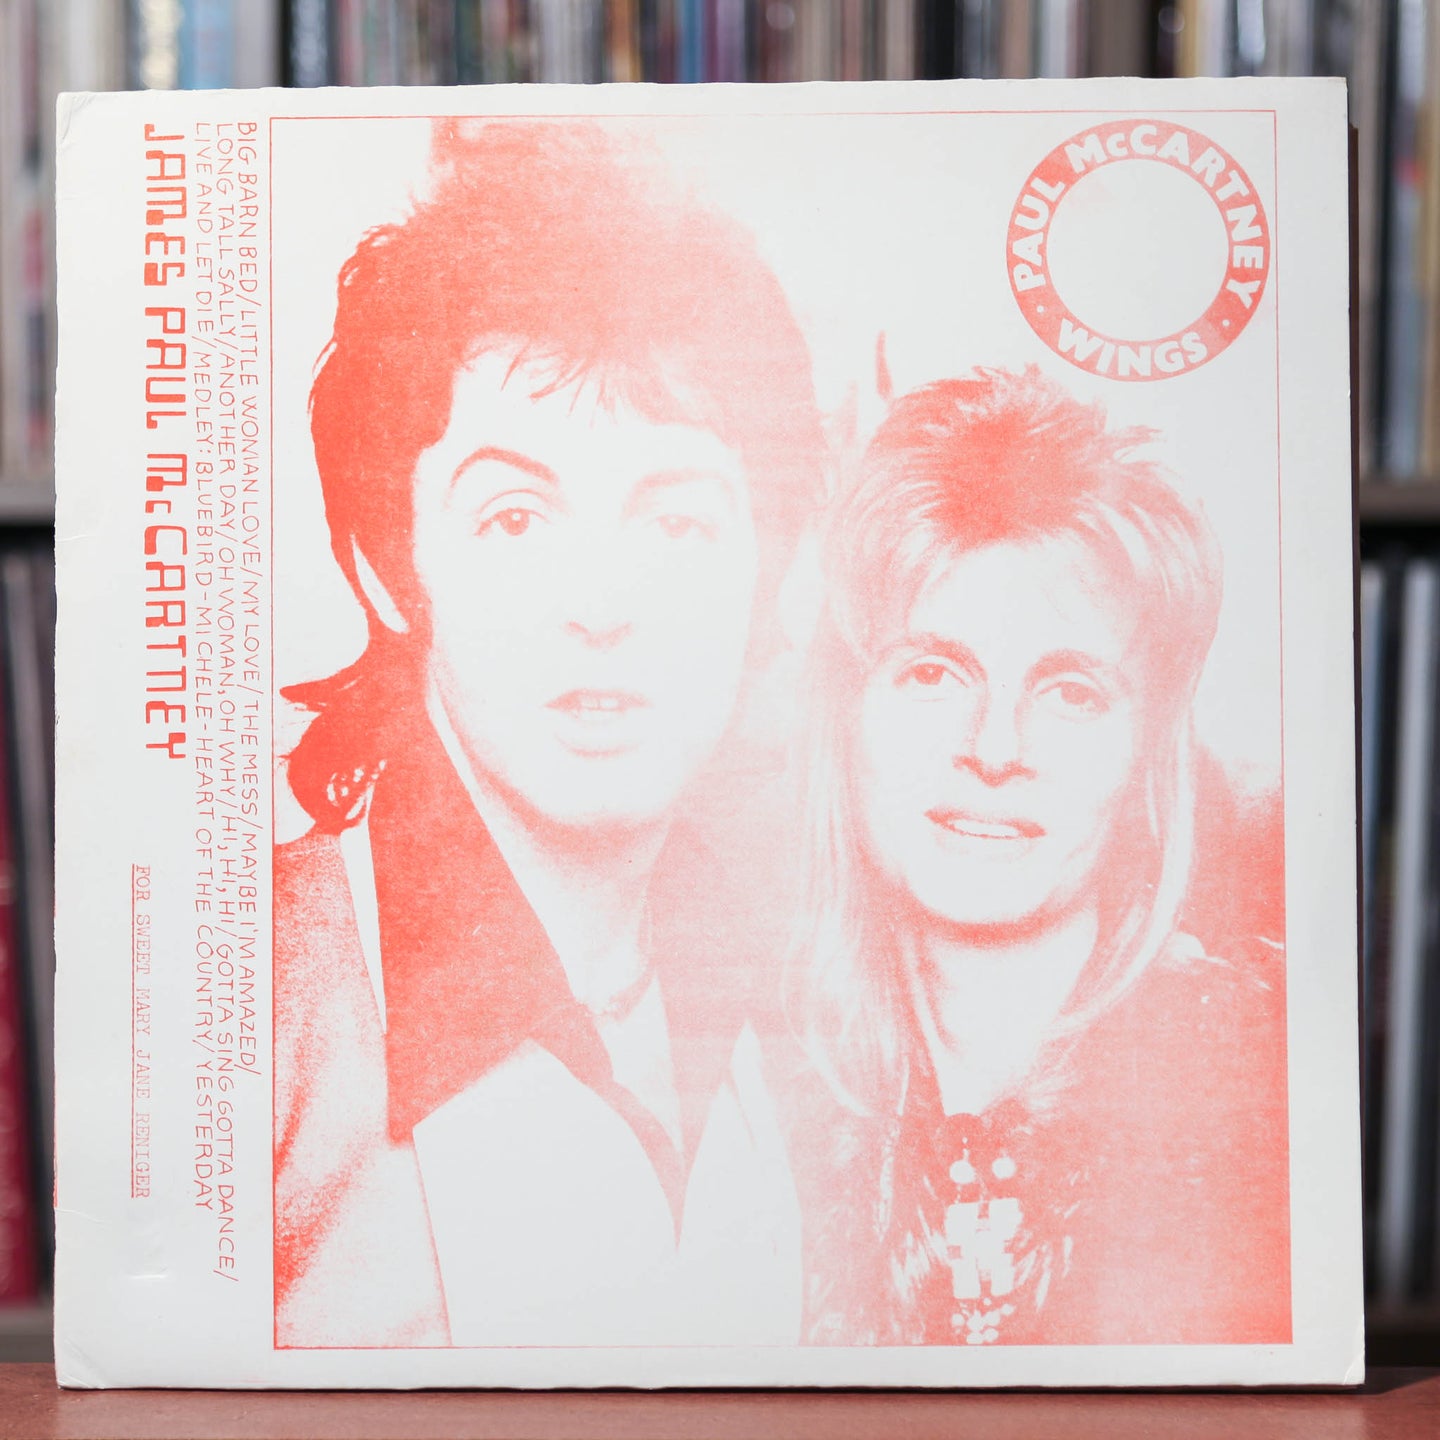 Paul McCartney & Wings - James Paul McCartney - 1973 TMQ, VG+/VG+